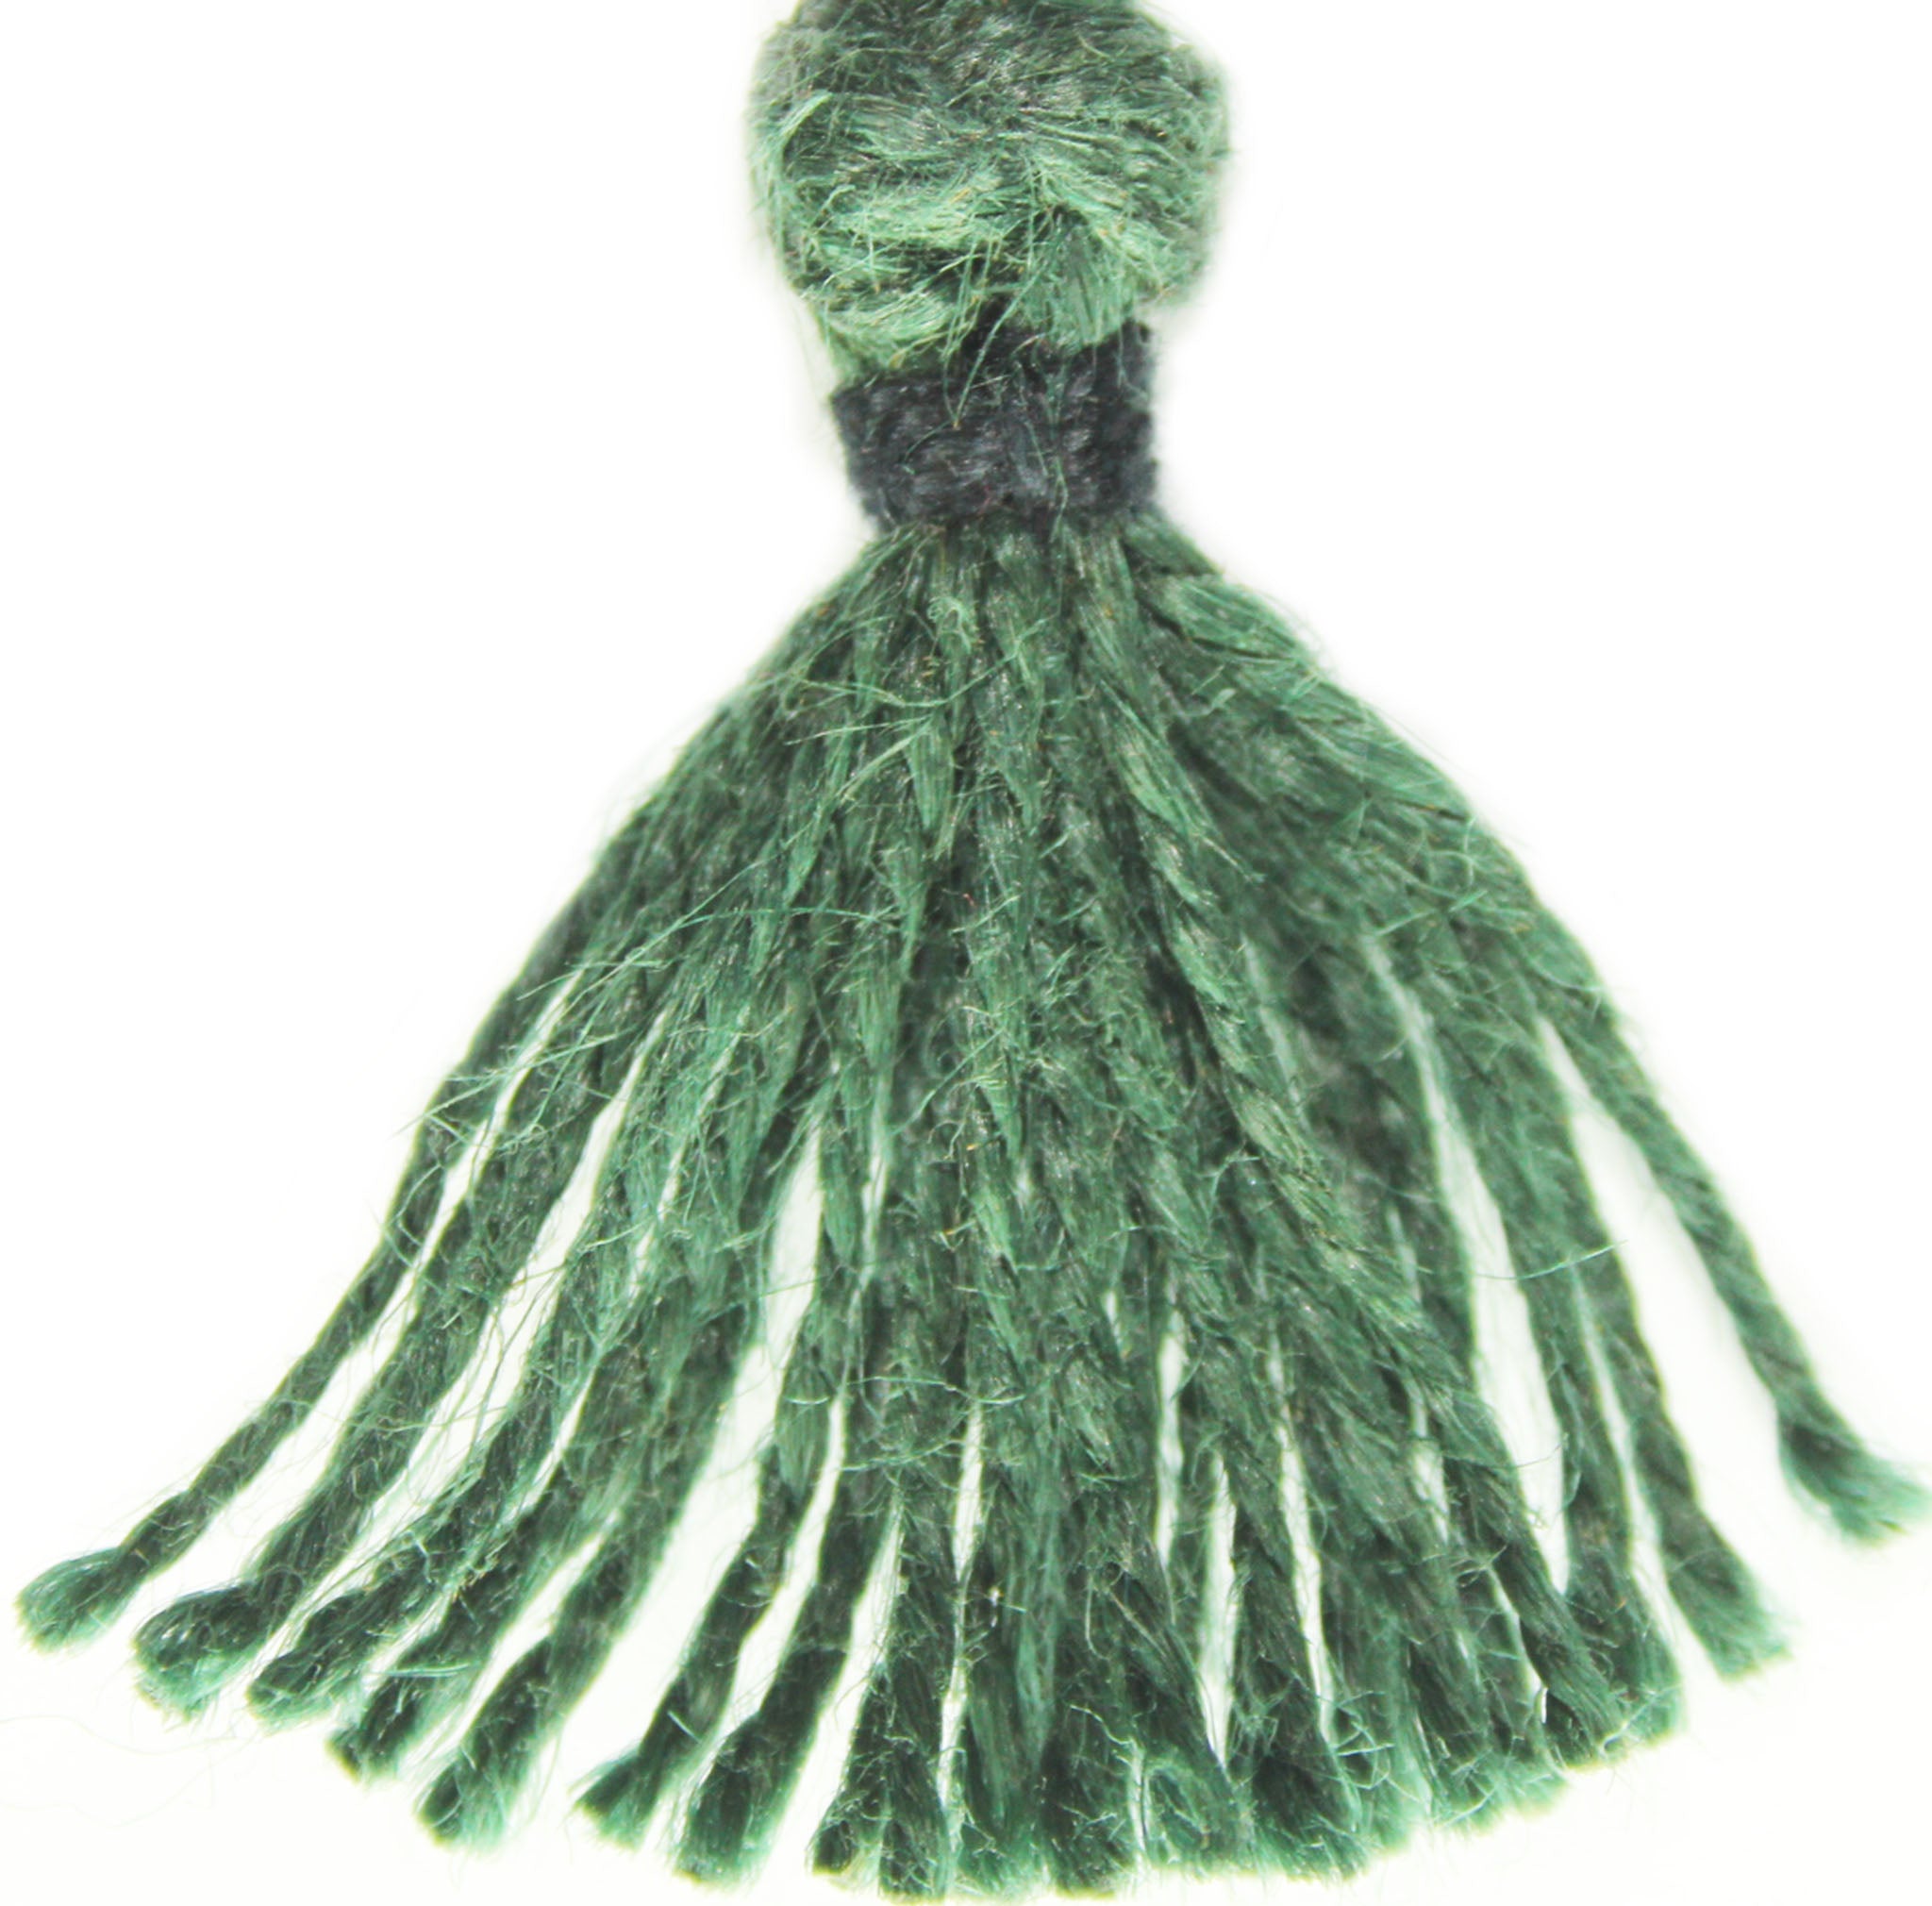 Chroma Green 8 jute rope (8m x 5-pack) – Douglas Kent Rope